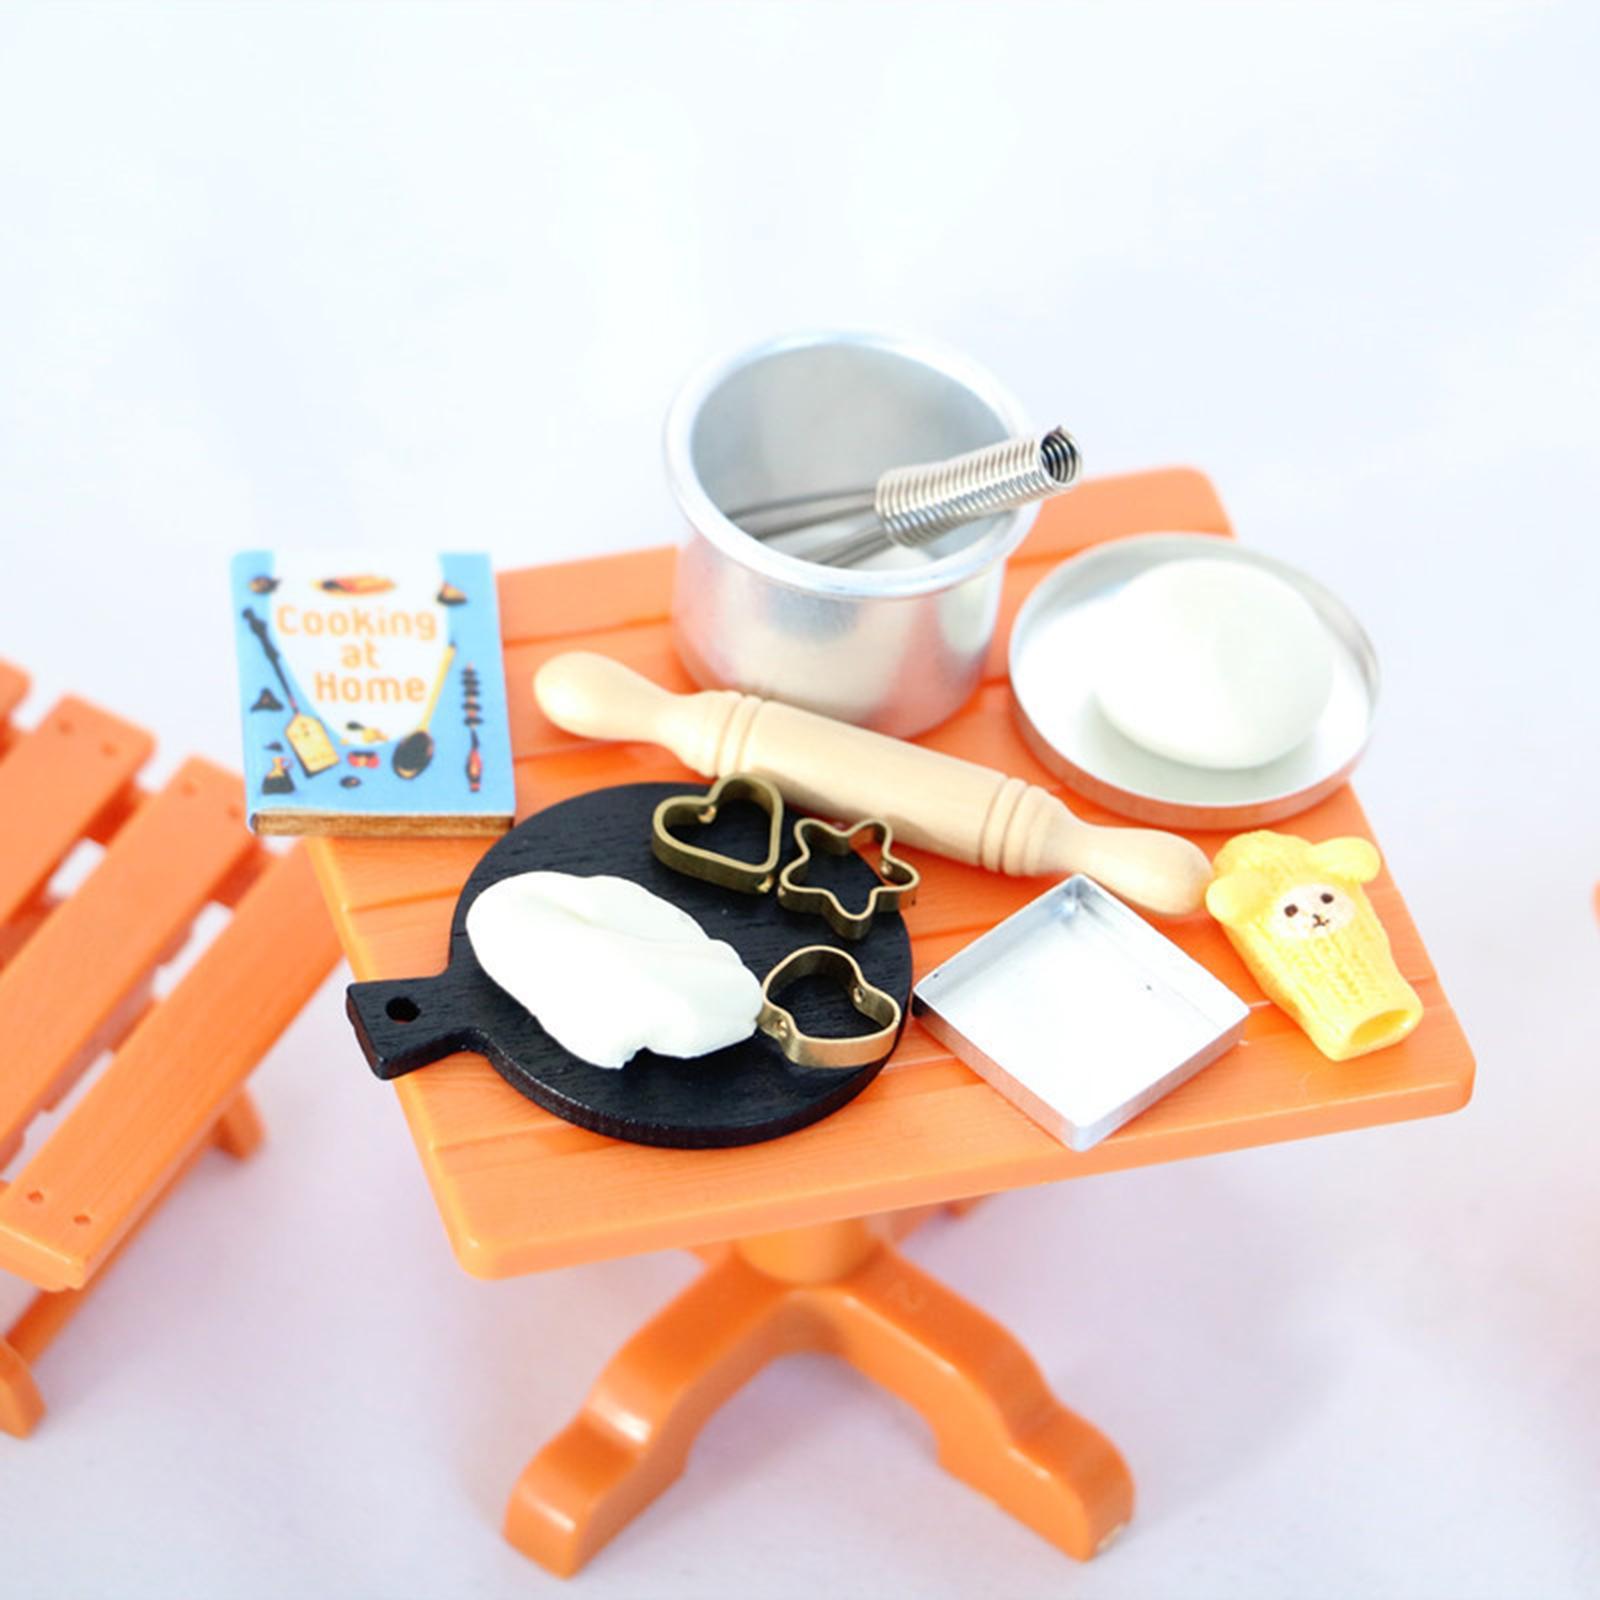 Food Baking Scene Simulation Baking Scene Set Miniature Baking Pan Beater for Gift